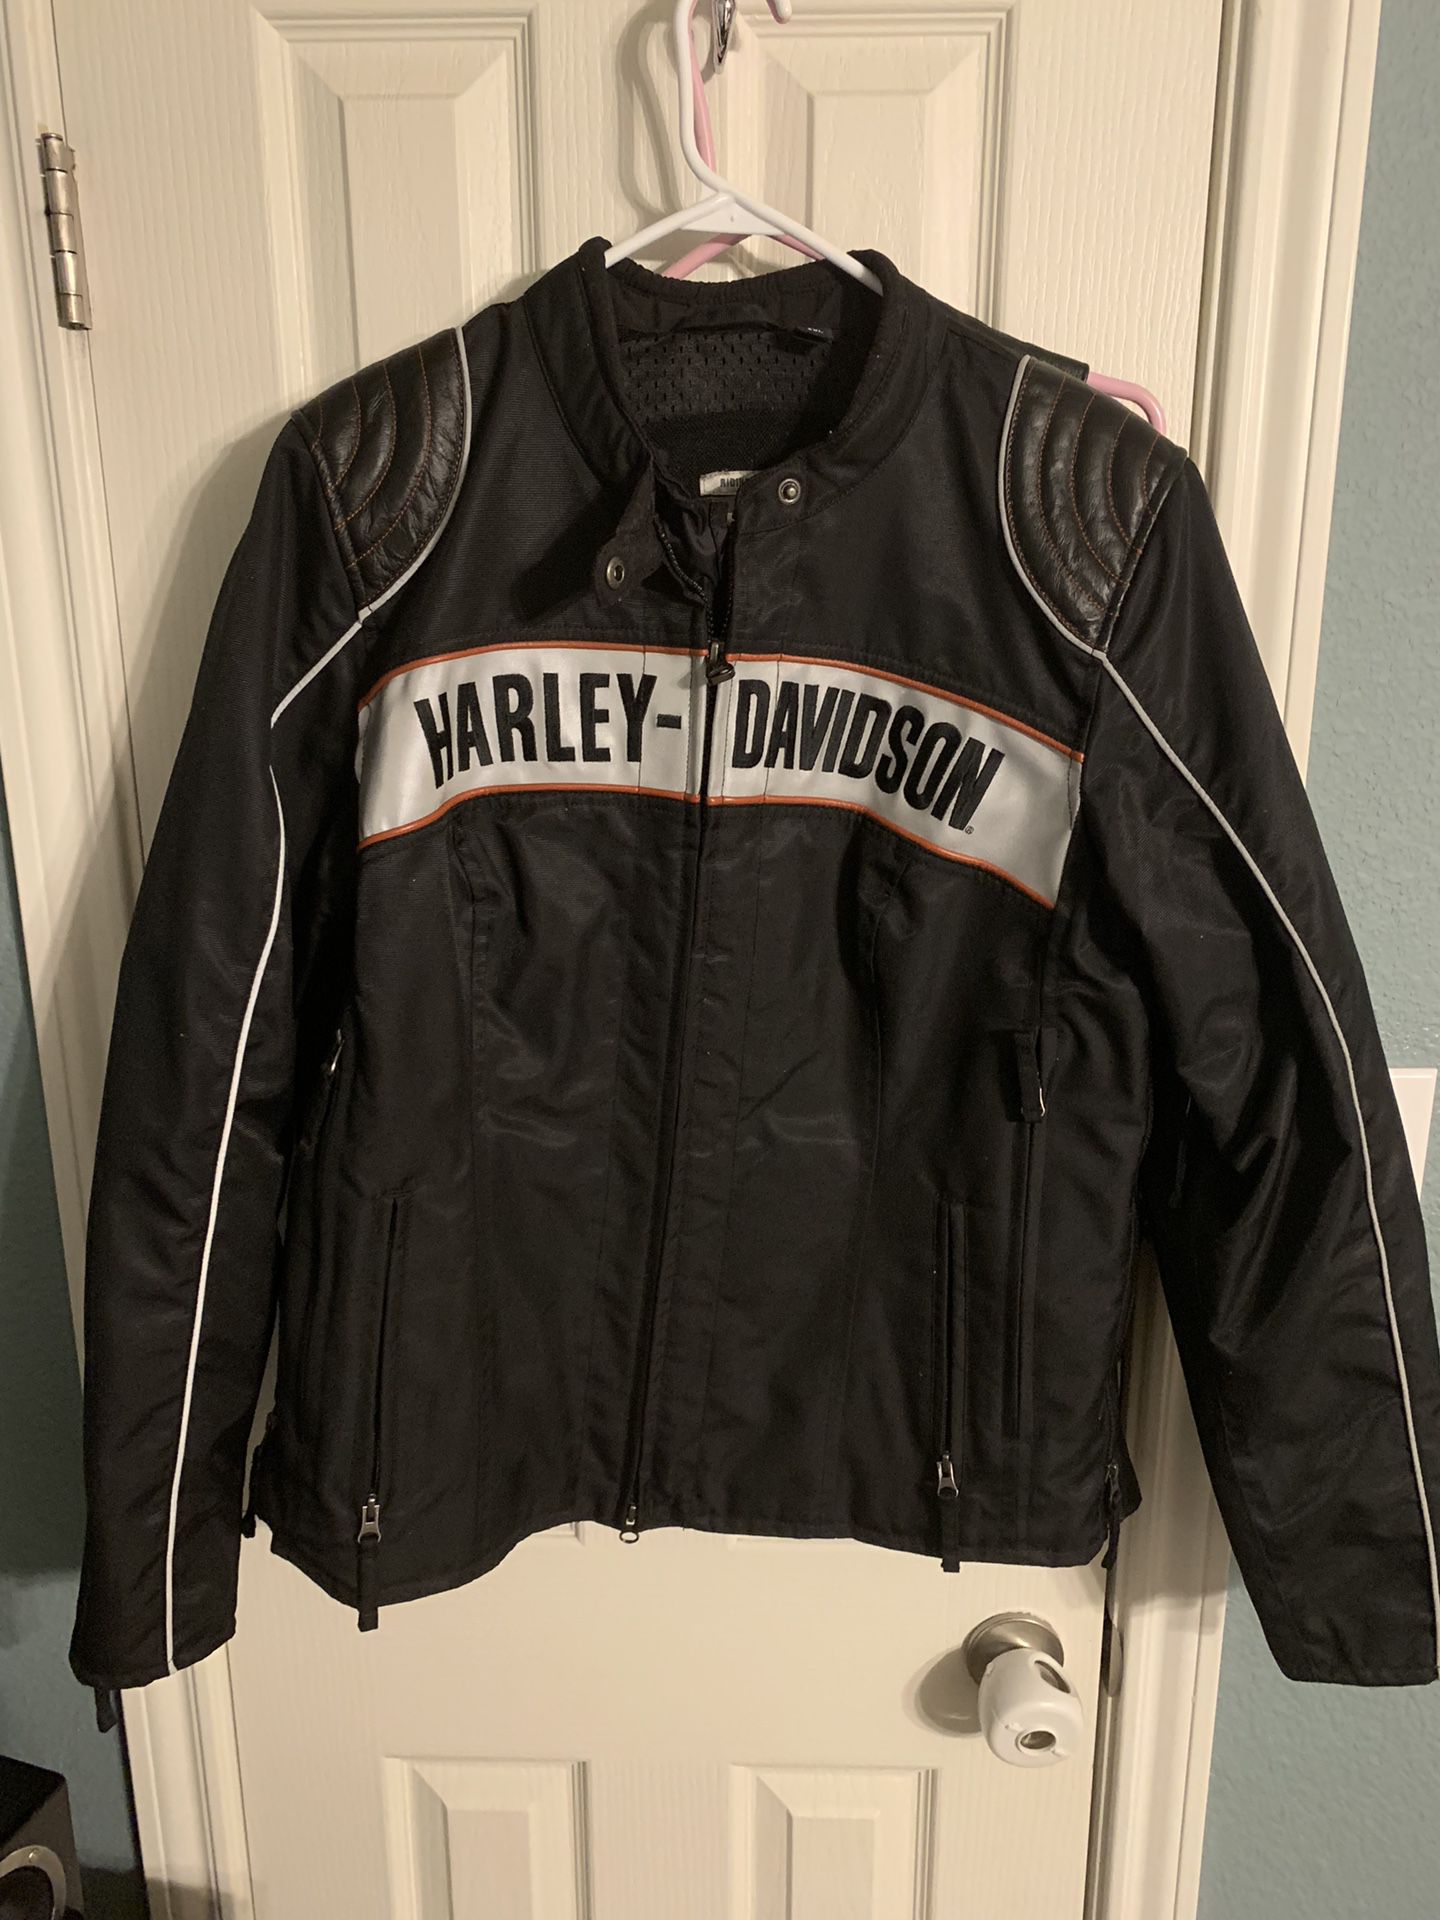 Genuine Harley Davidson Motorcycle Jacket “Brand New” Never worn. Size 2X